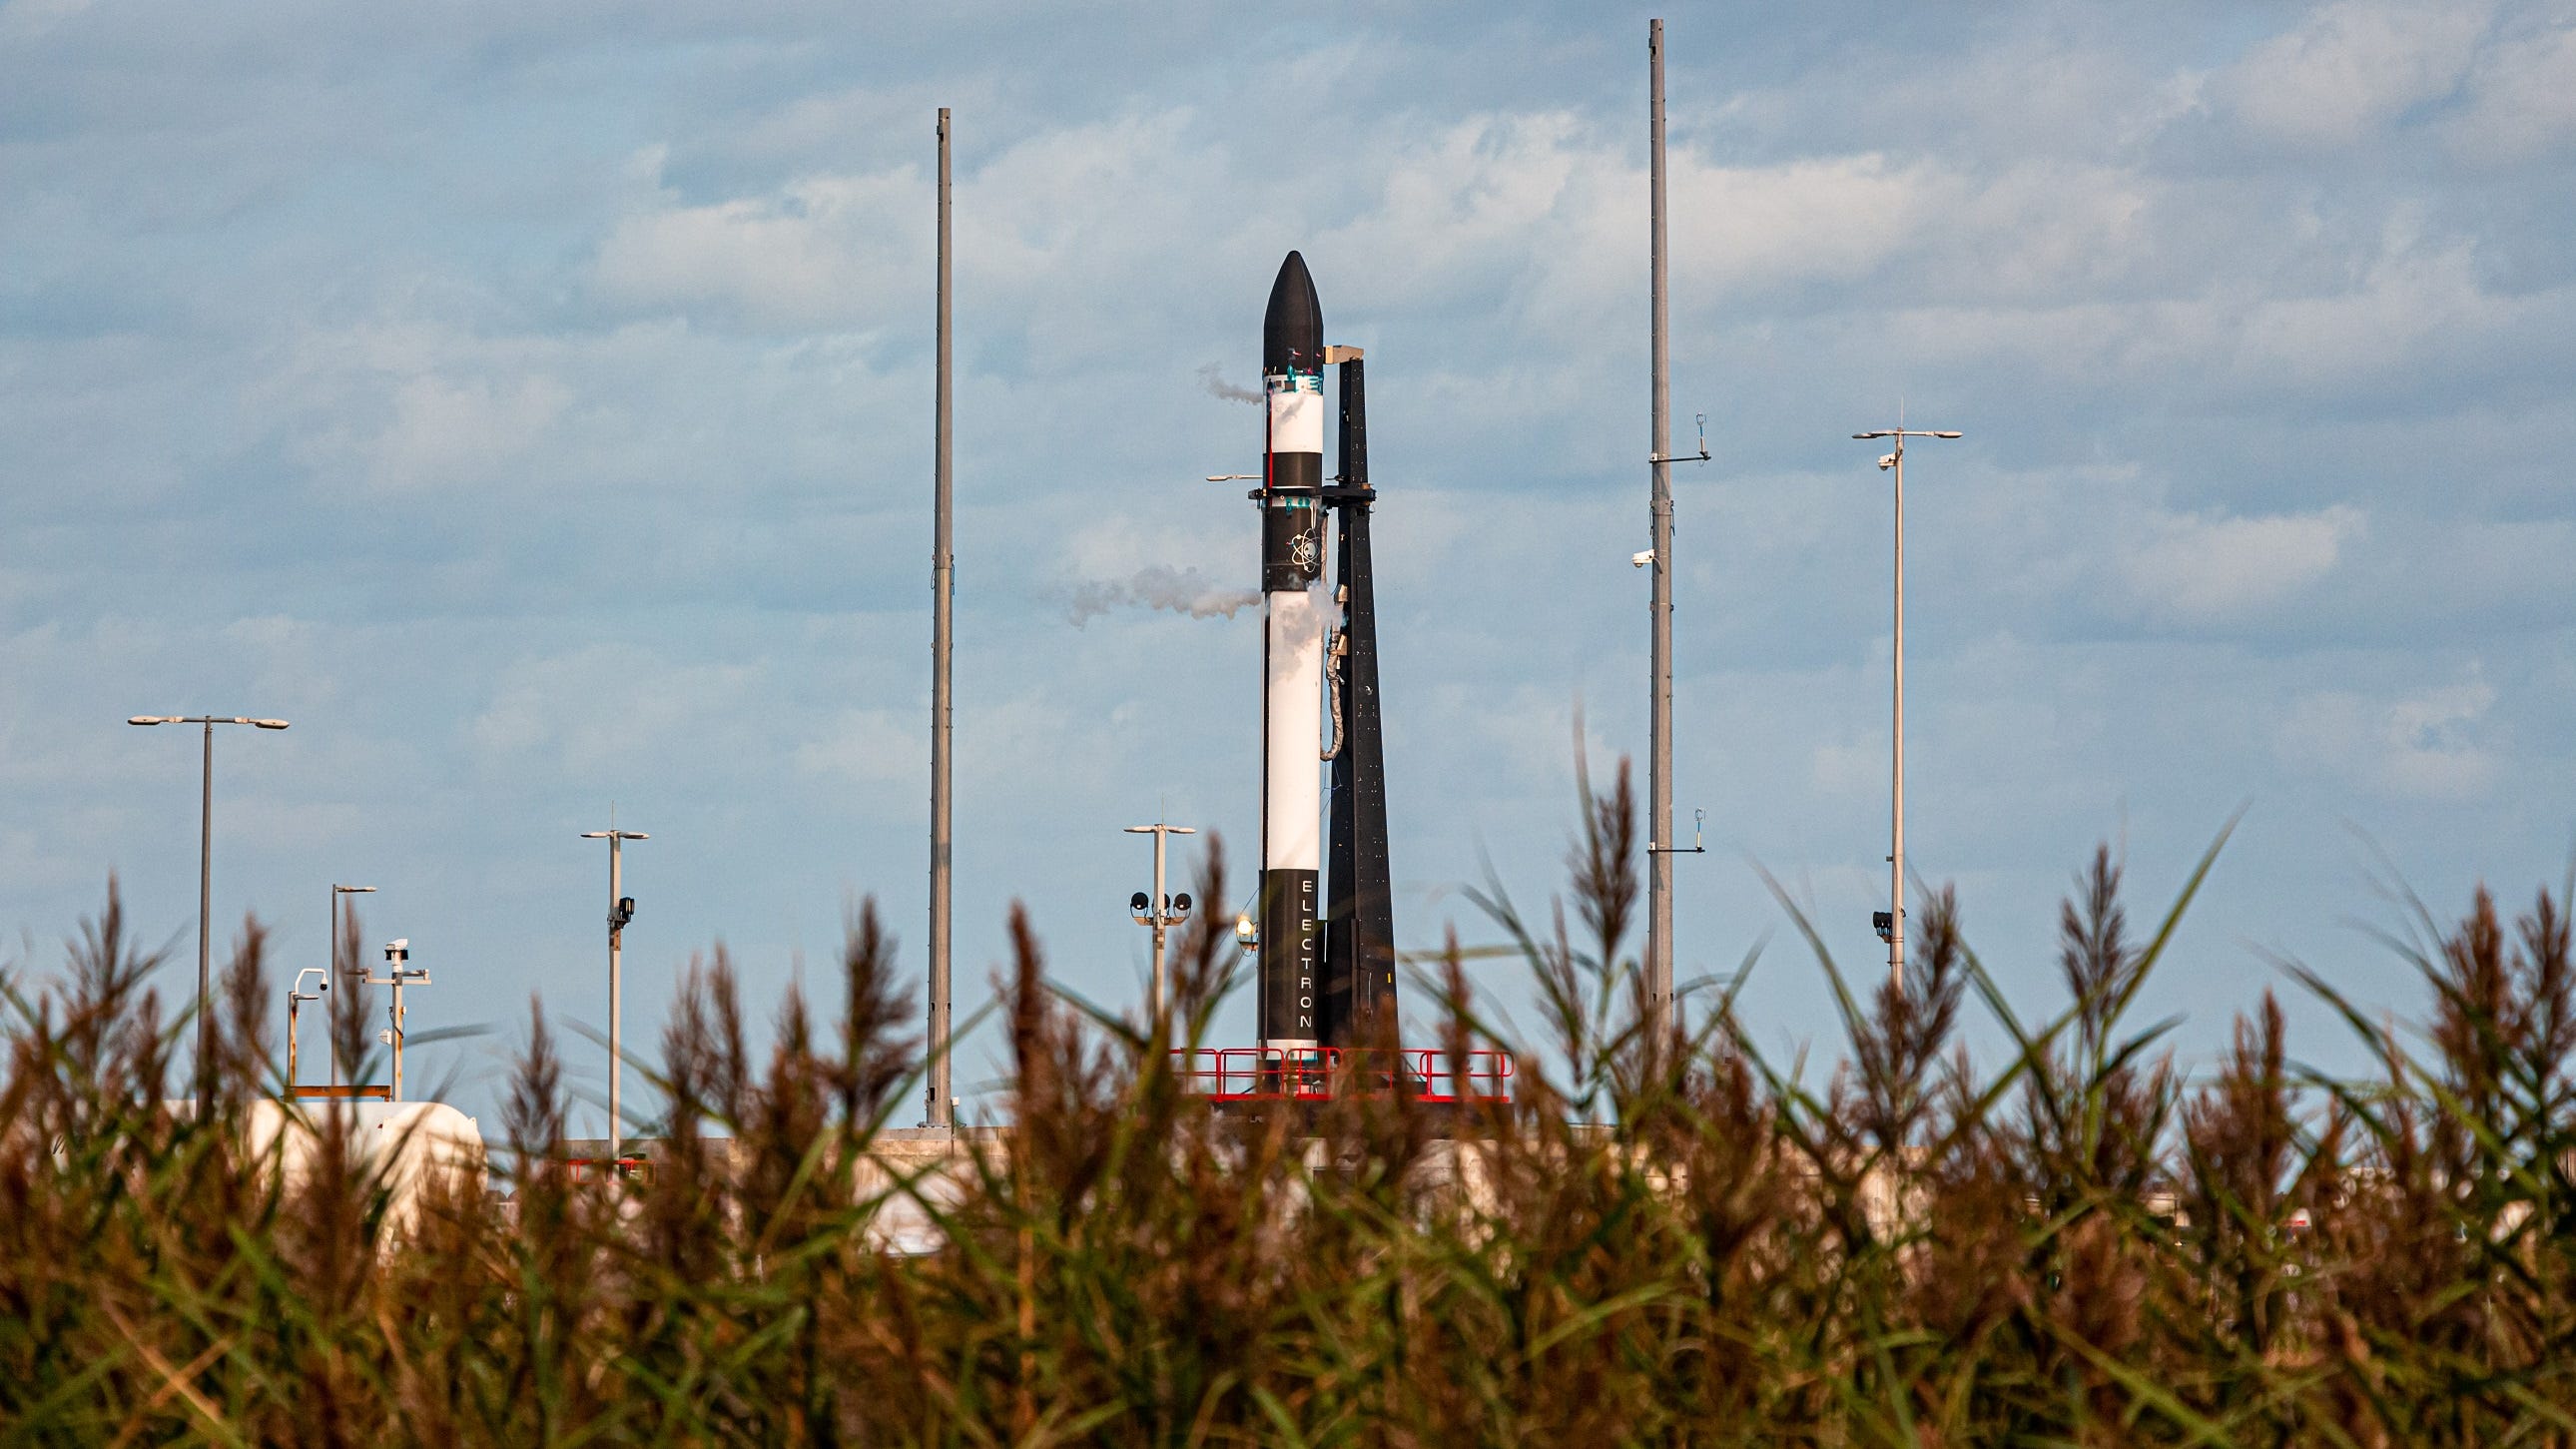 Rocket Lab Launch Pad At Wallops Island Ready For Liftoff